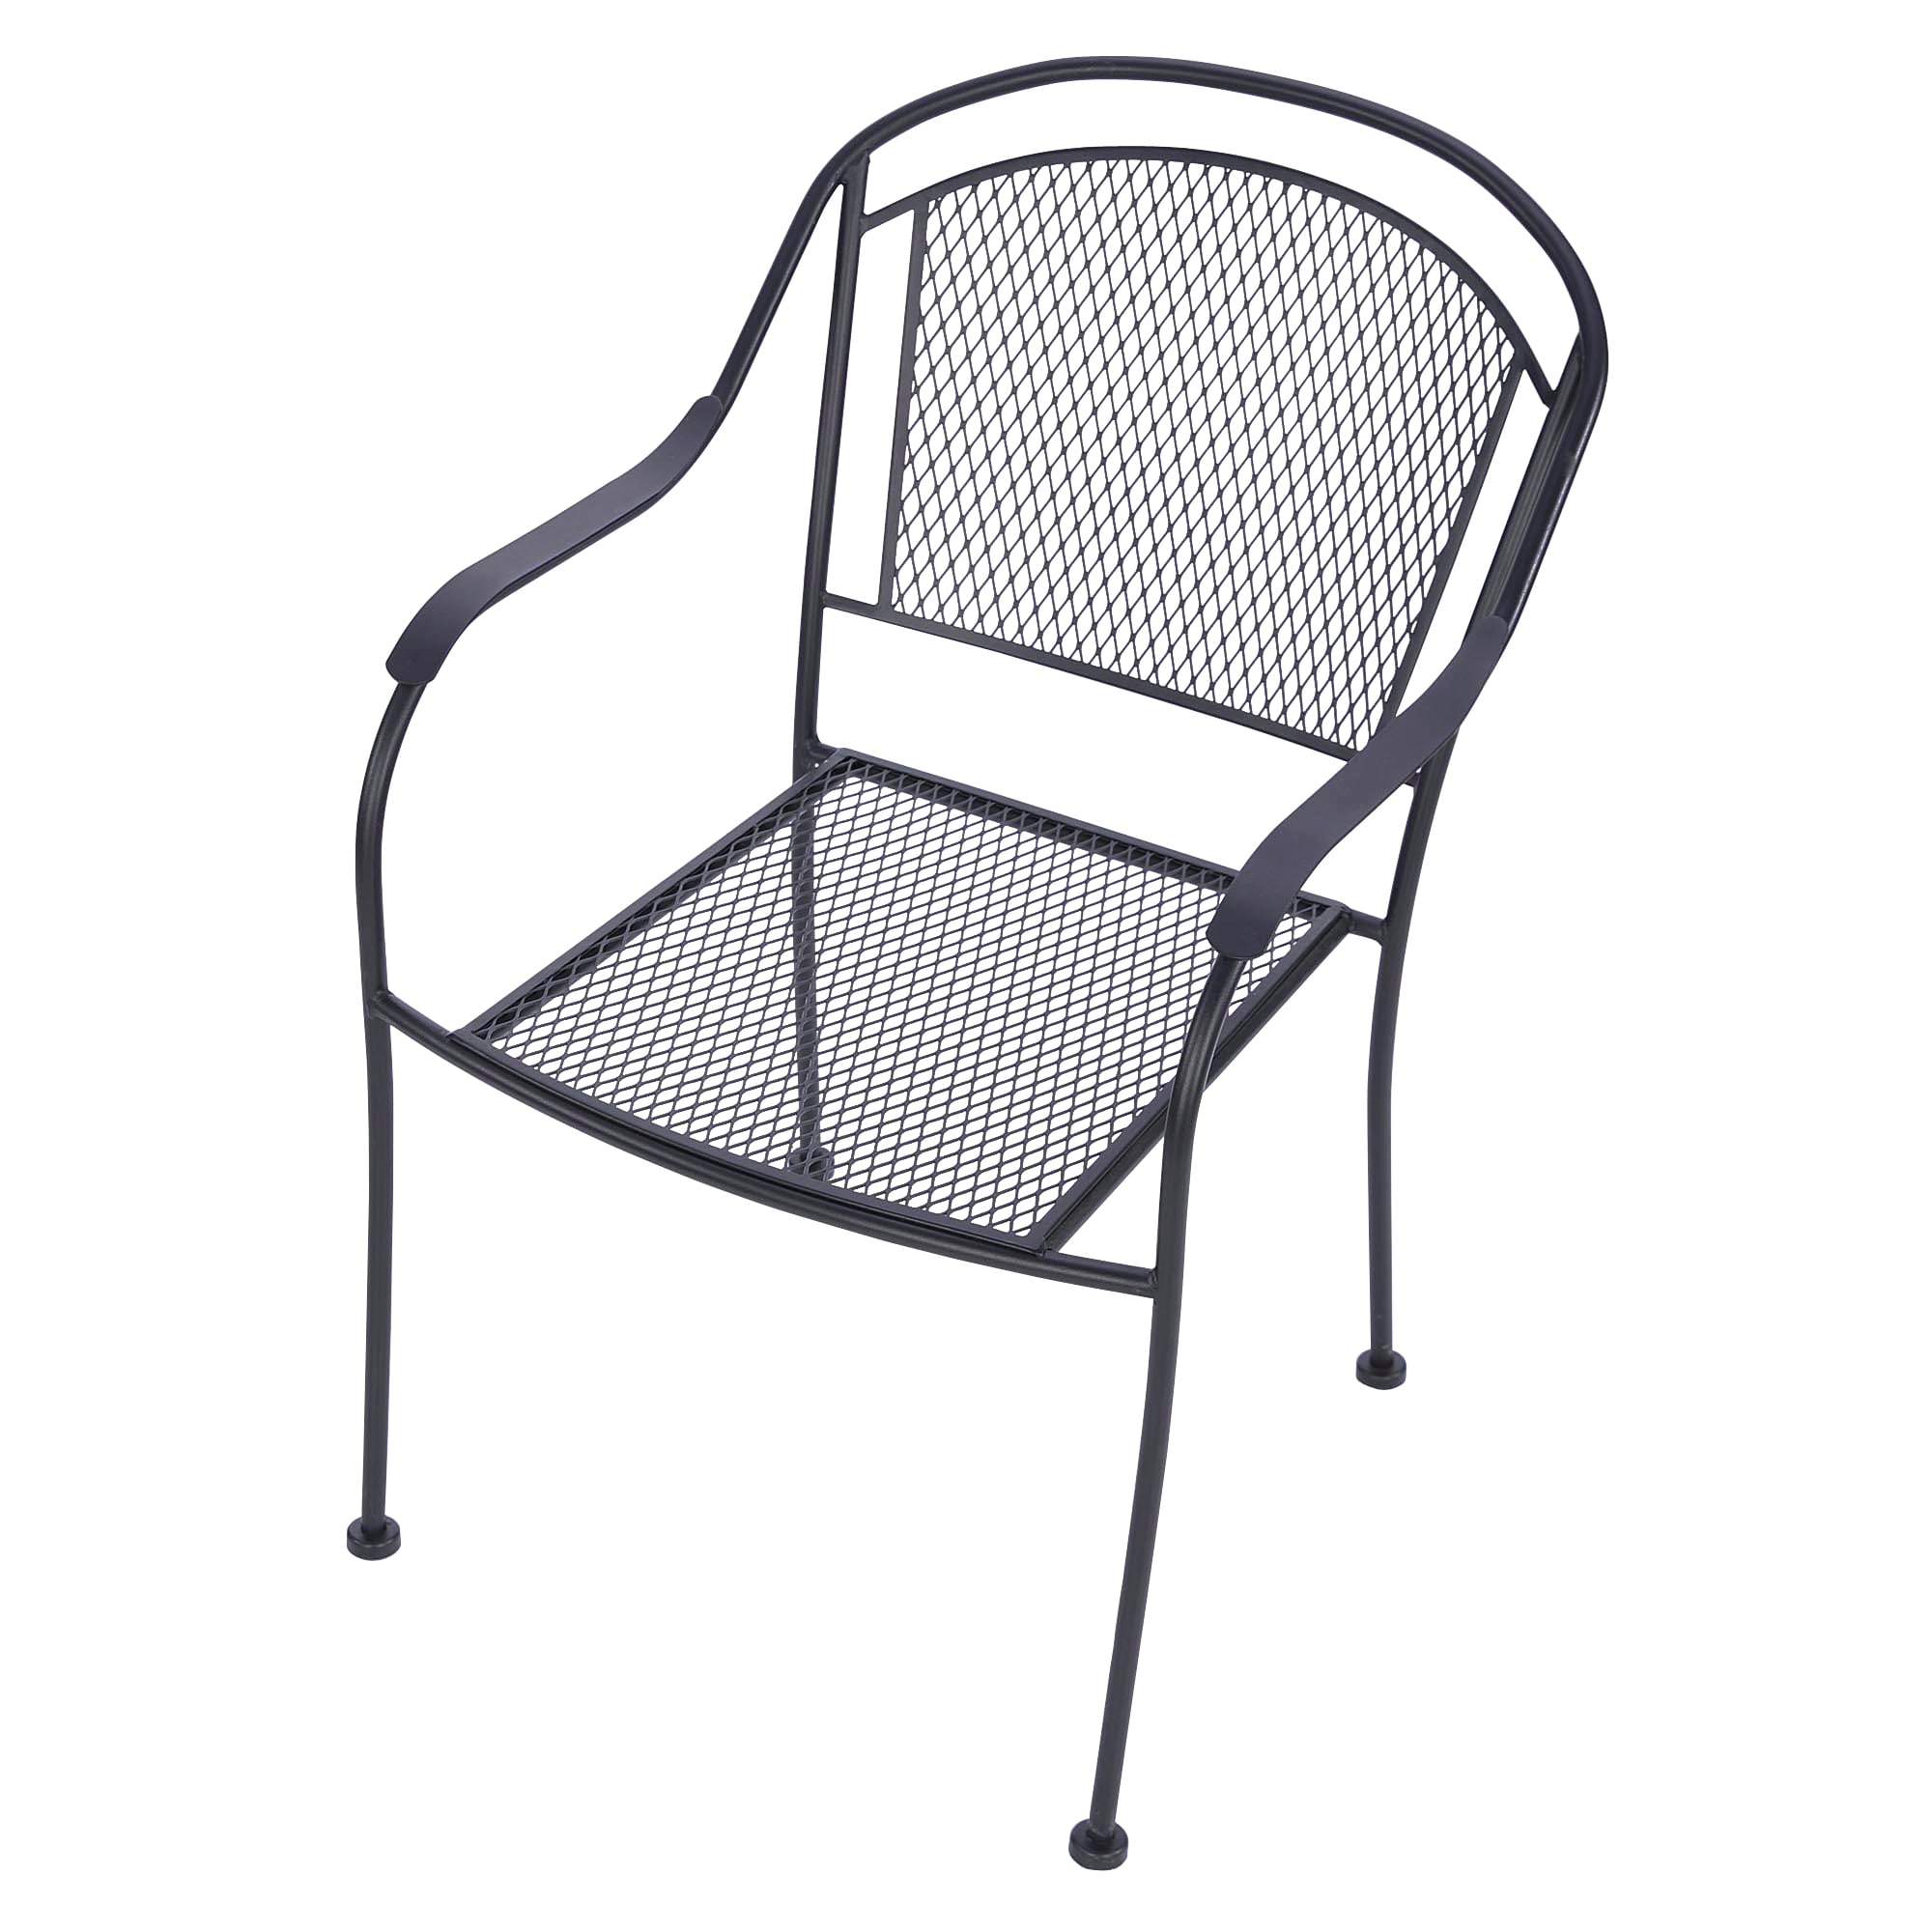 Steel mesh chairs